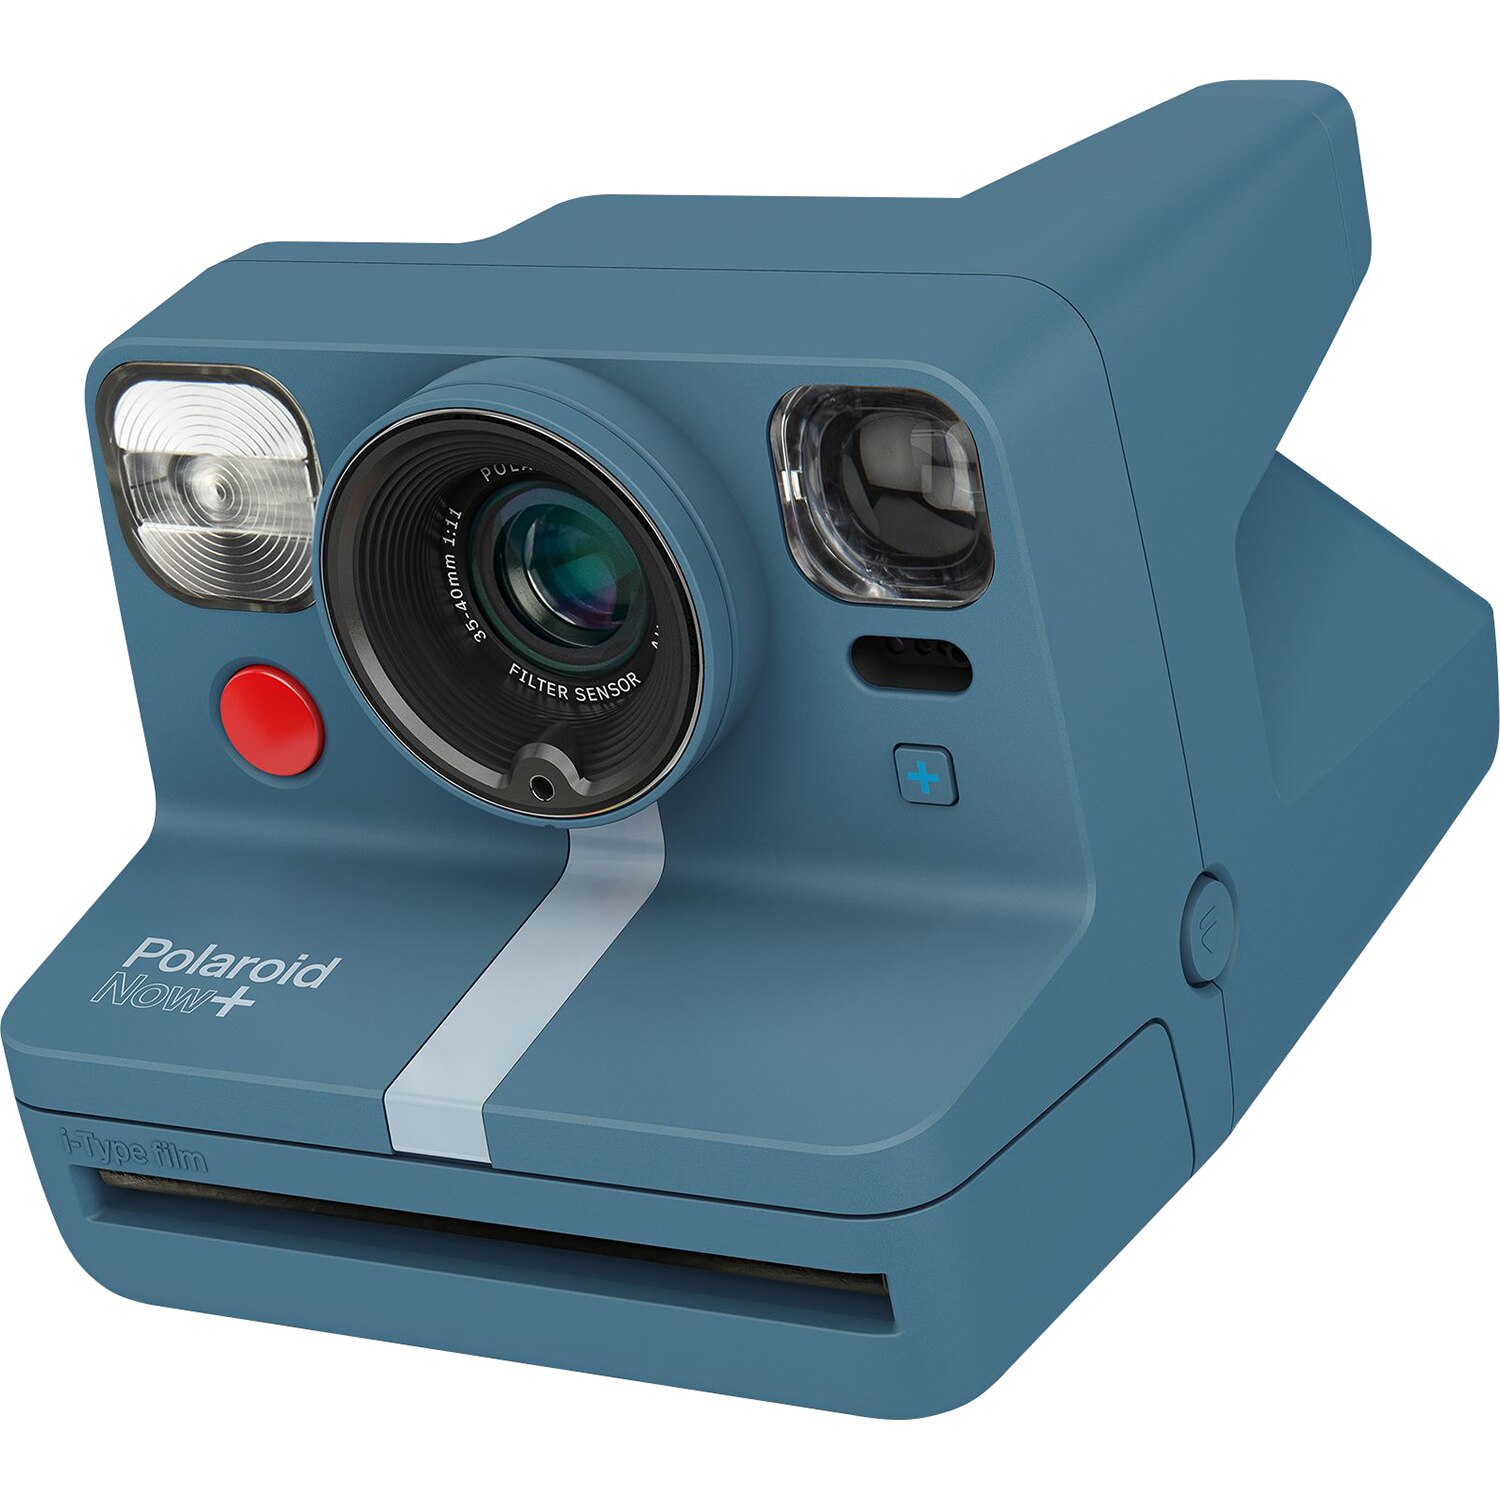 Polaroid Now+ Instant Camera, Blue Gray